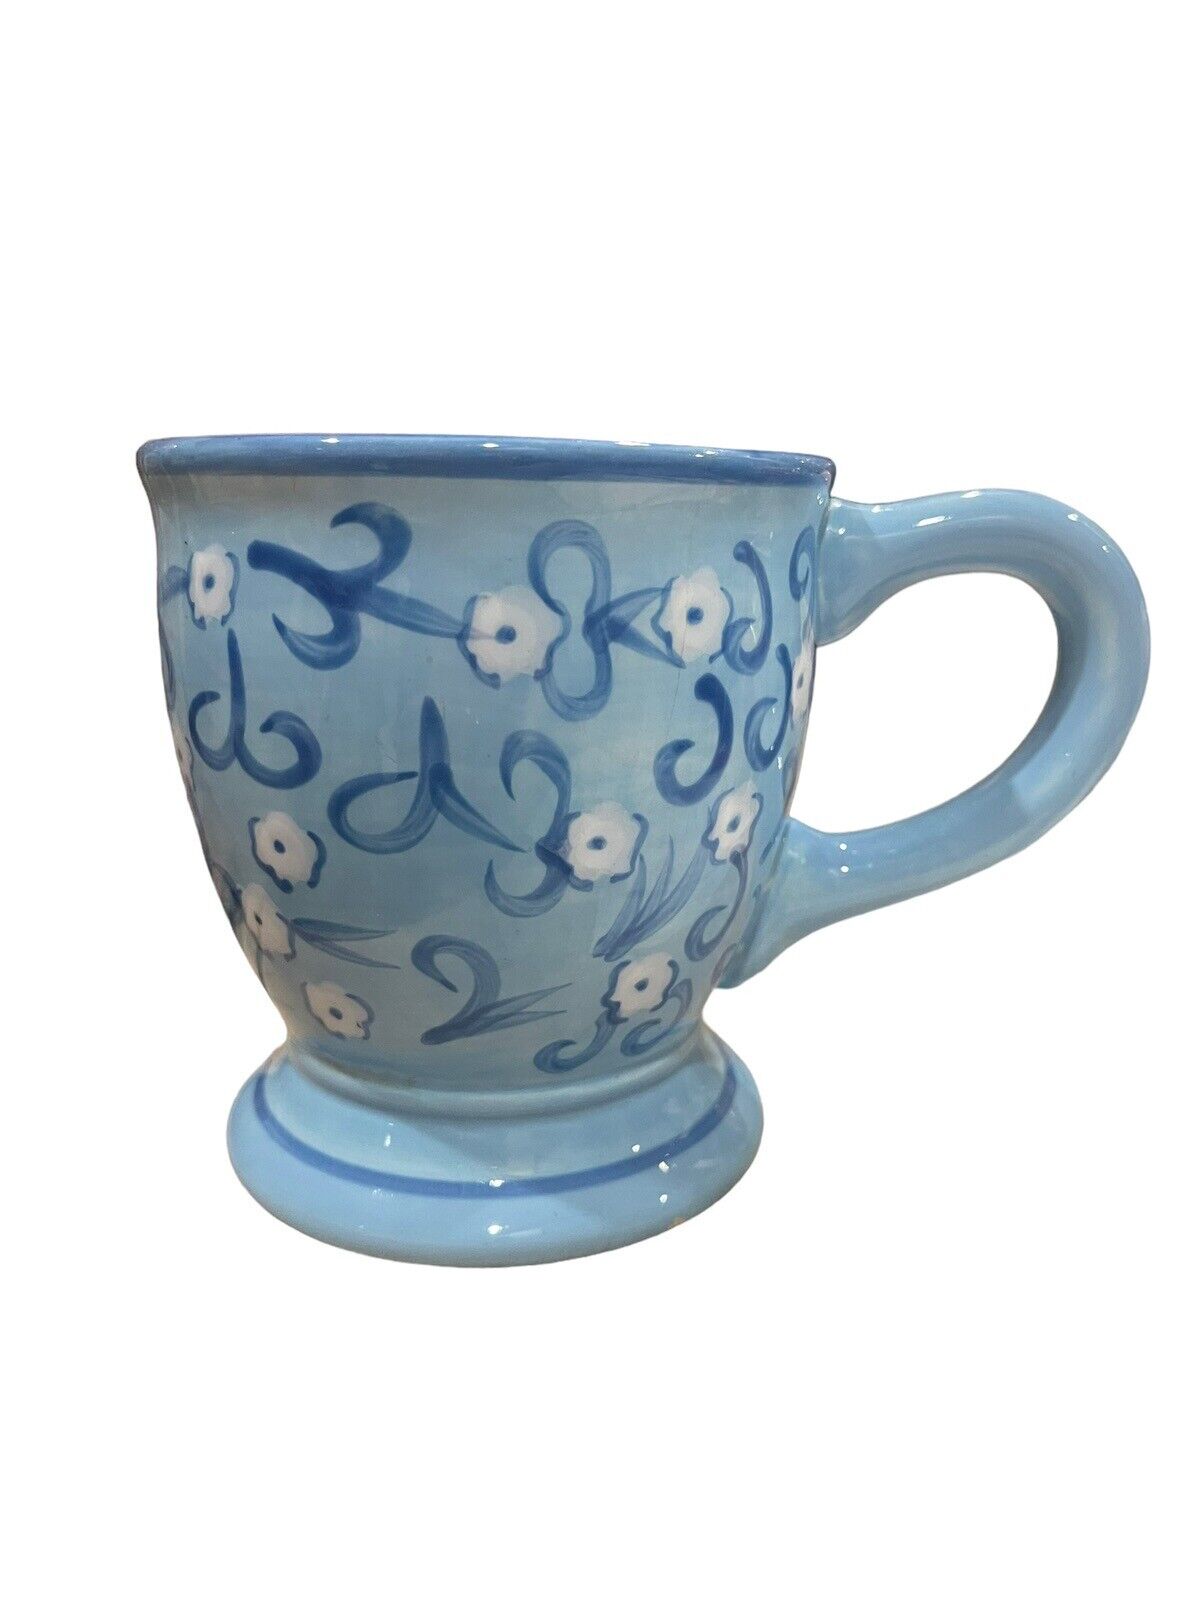 Hallmark Coffee Mug Blue Floral By Kimberly Hodges **TINY FLAW**